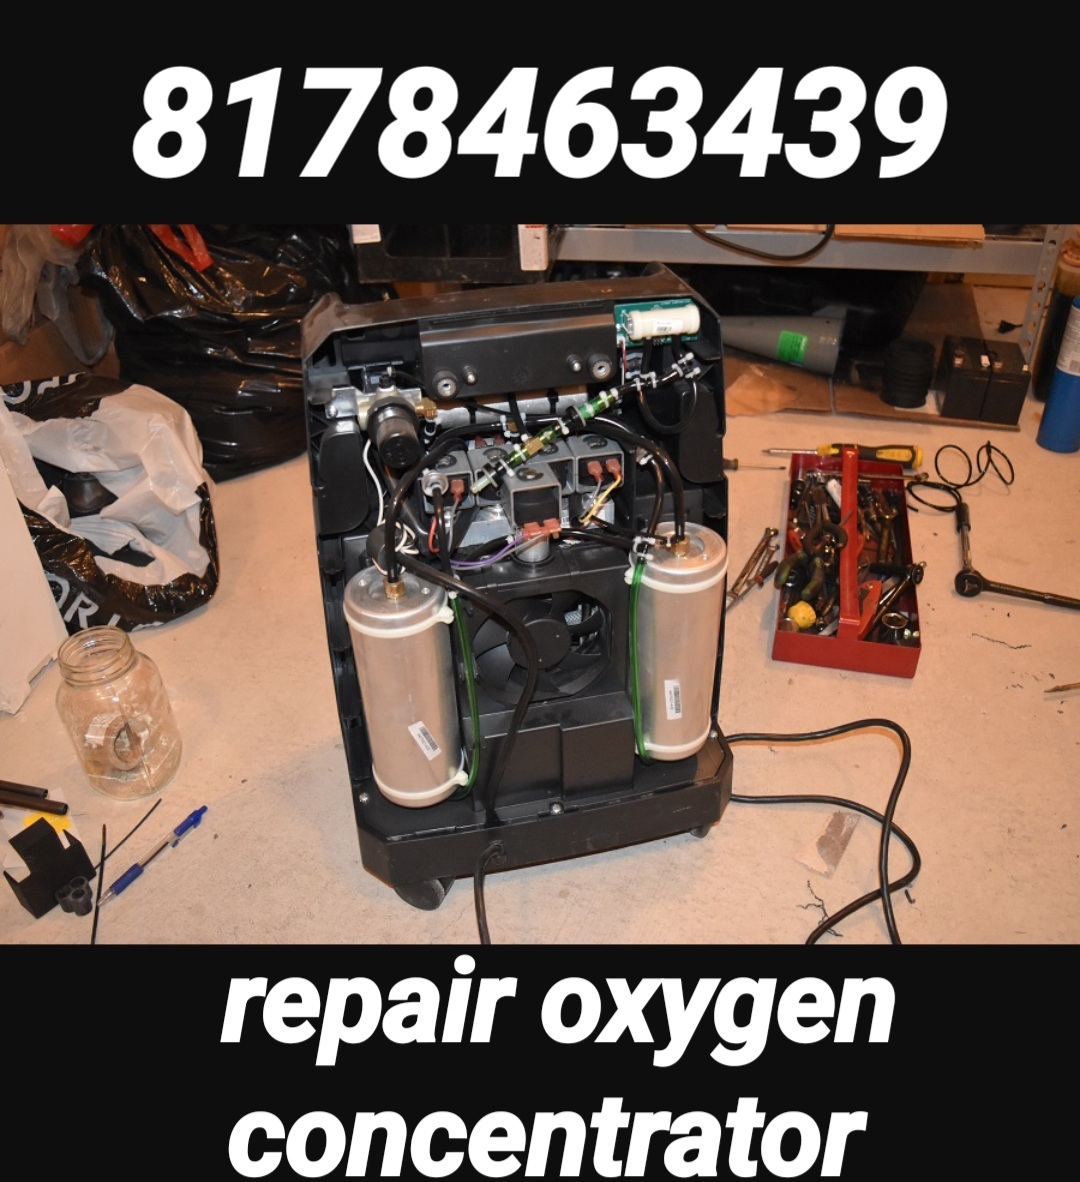 oxygen machine repair centre in gtb enclave 8178463439